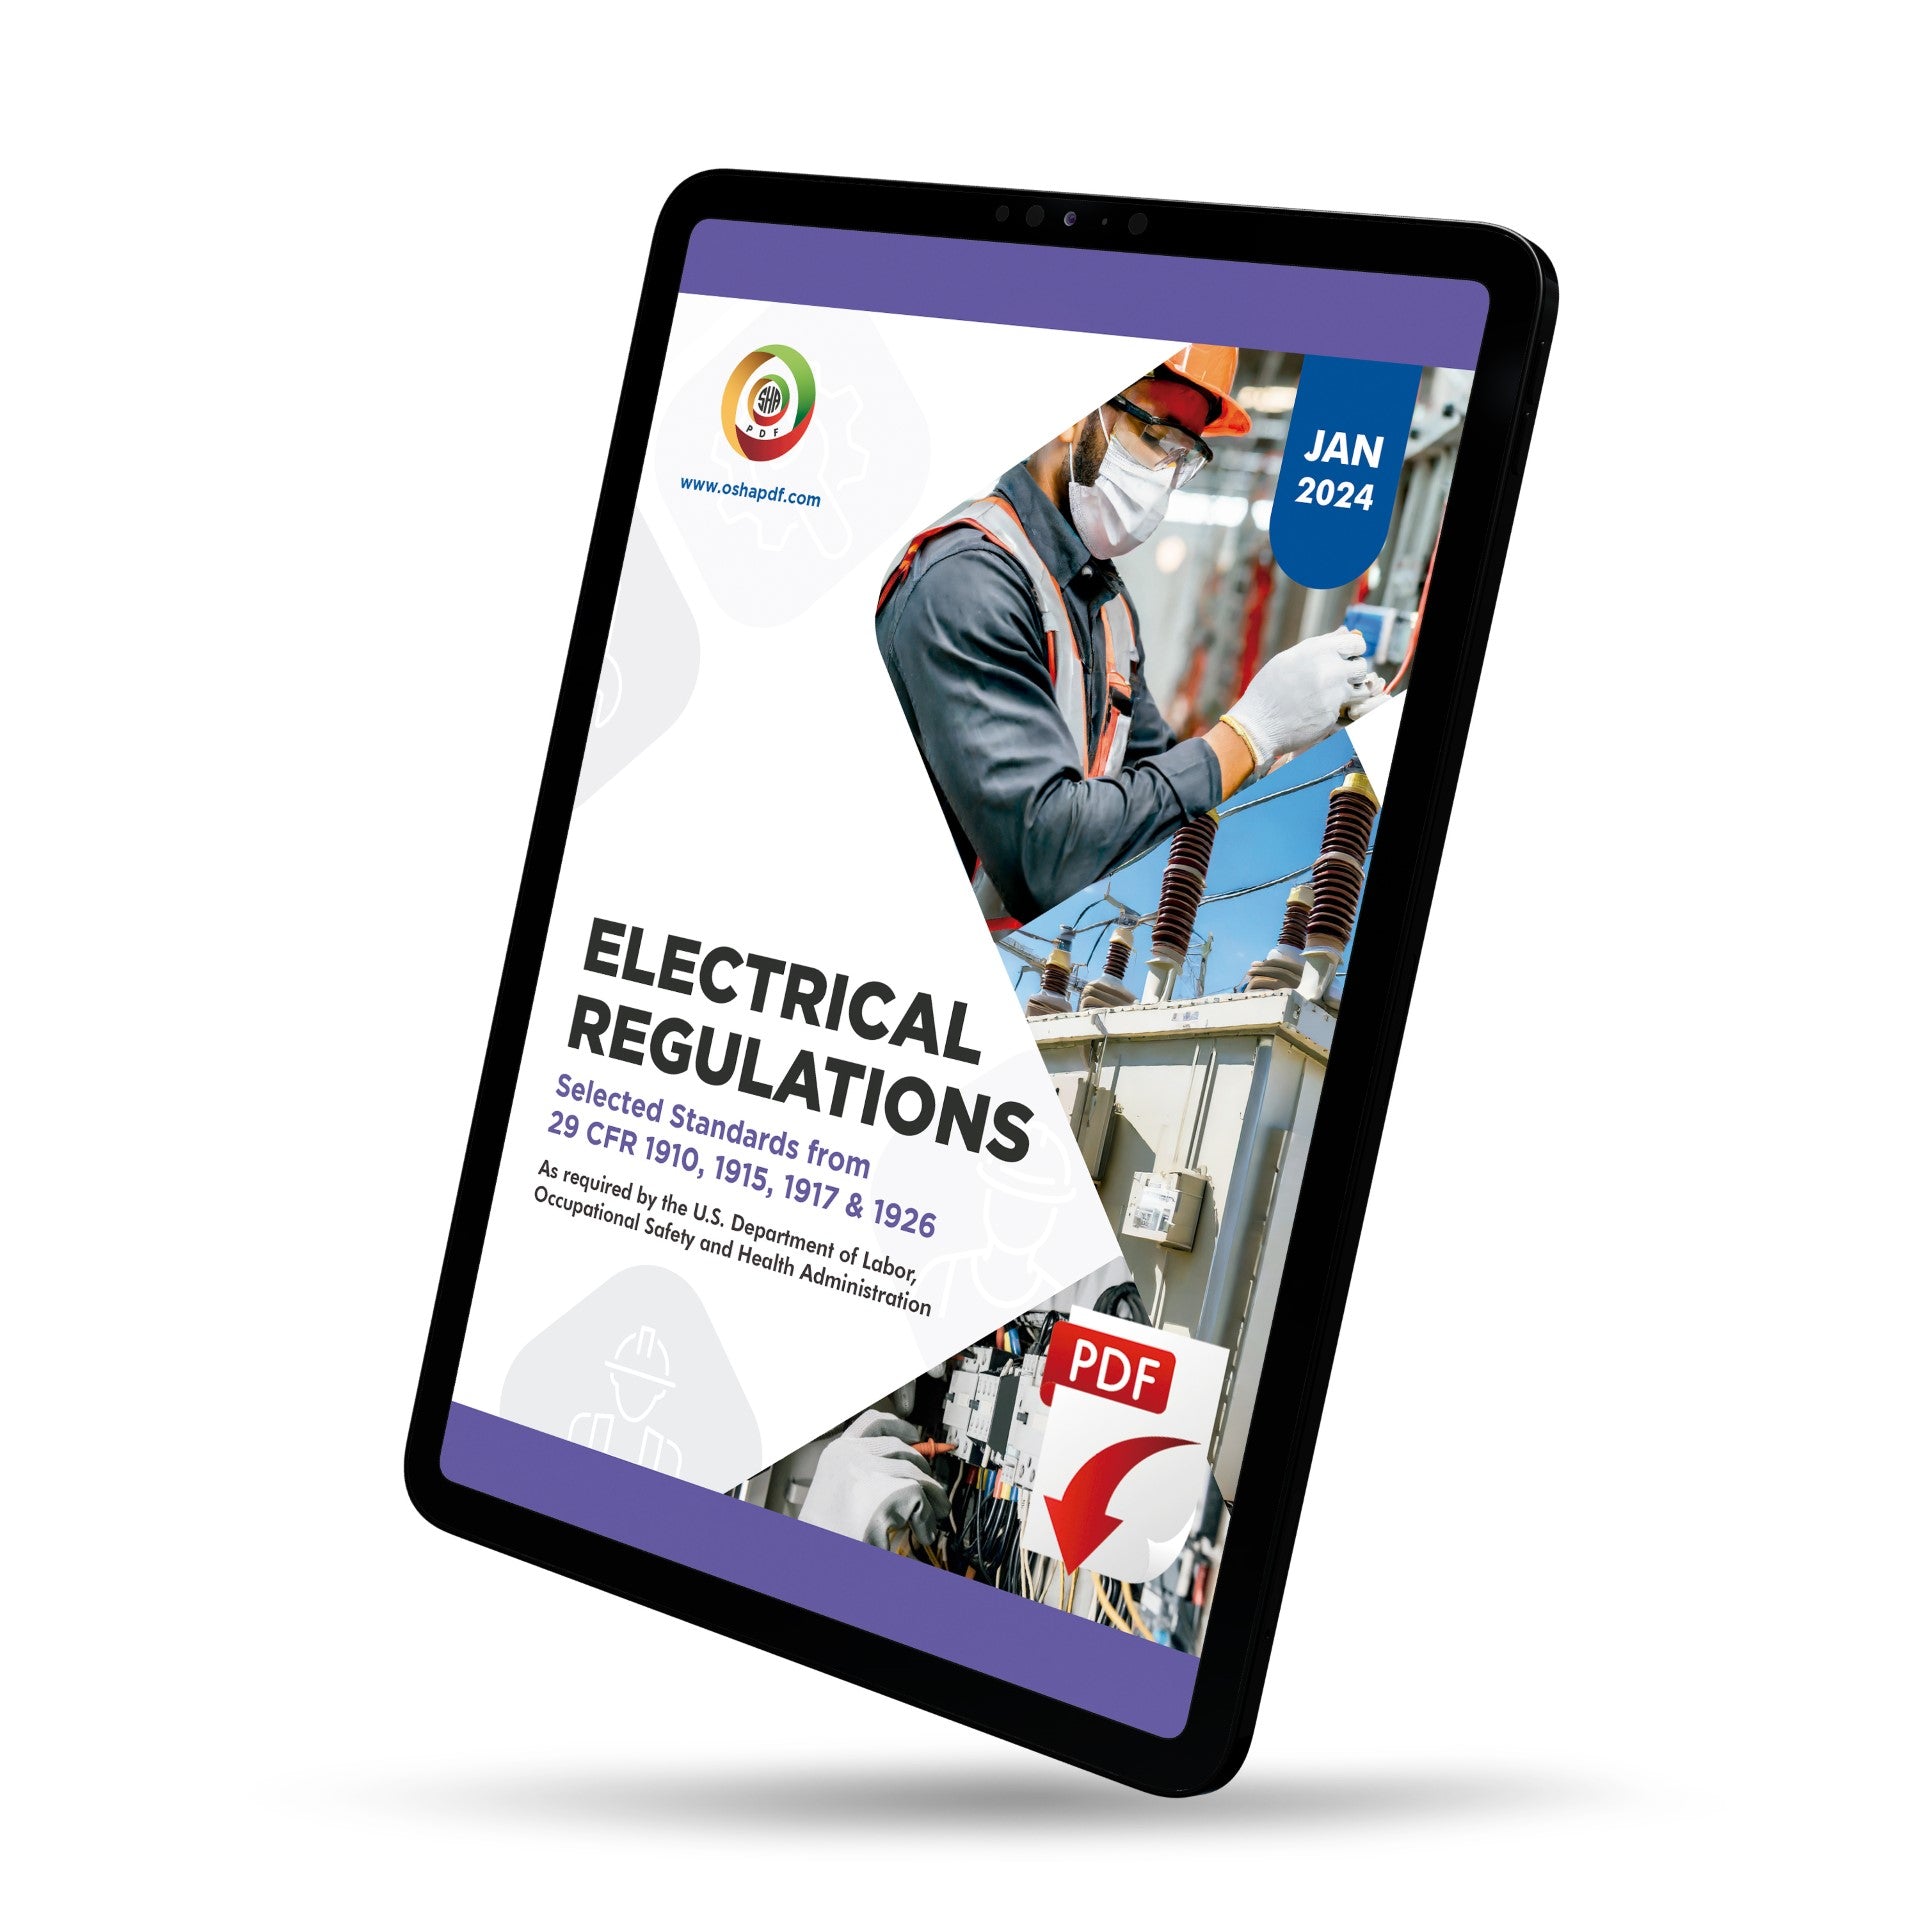 OSHA Electrical Regulations Book - January 2024